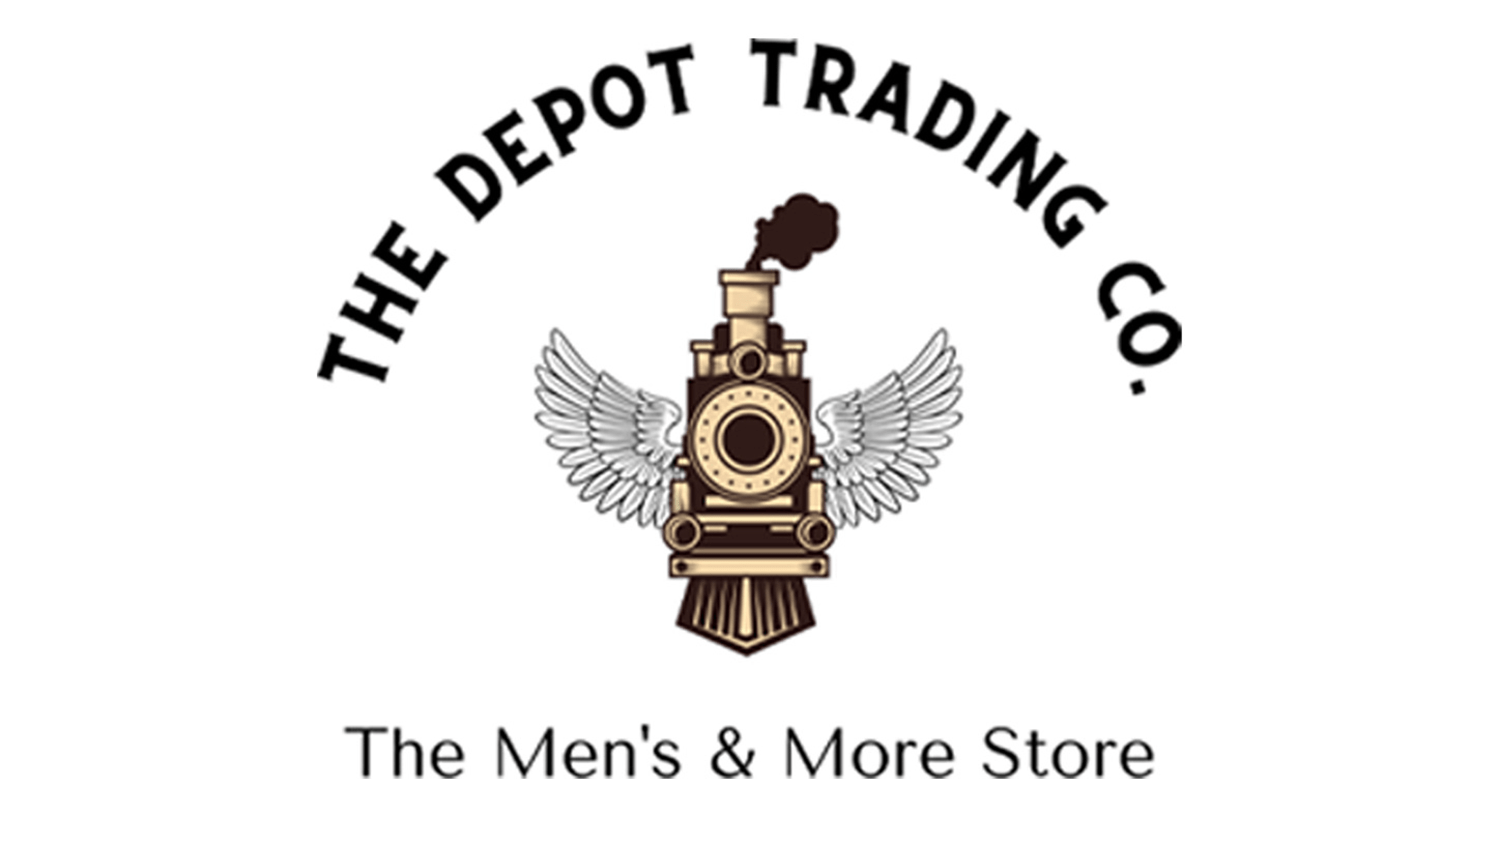 The Depot Trading Company